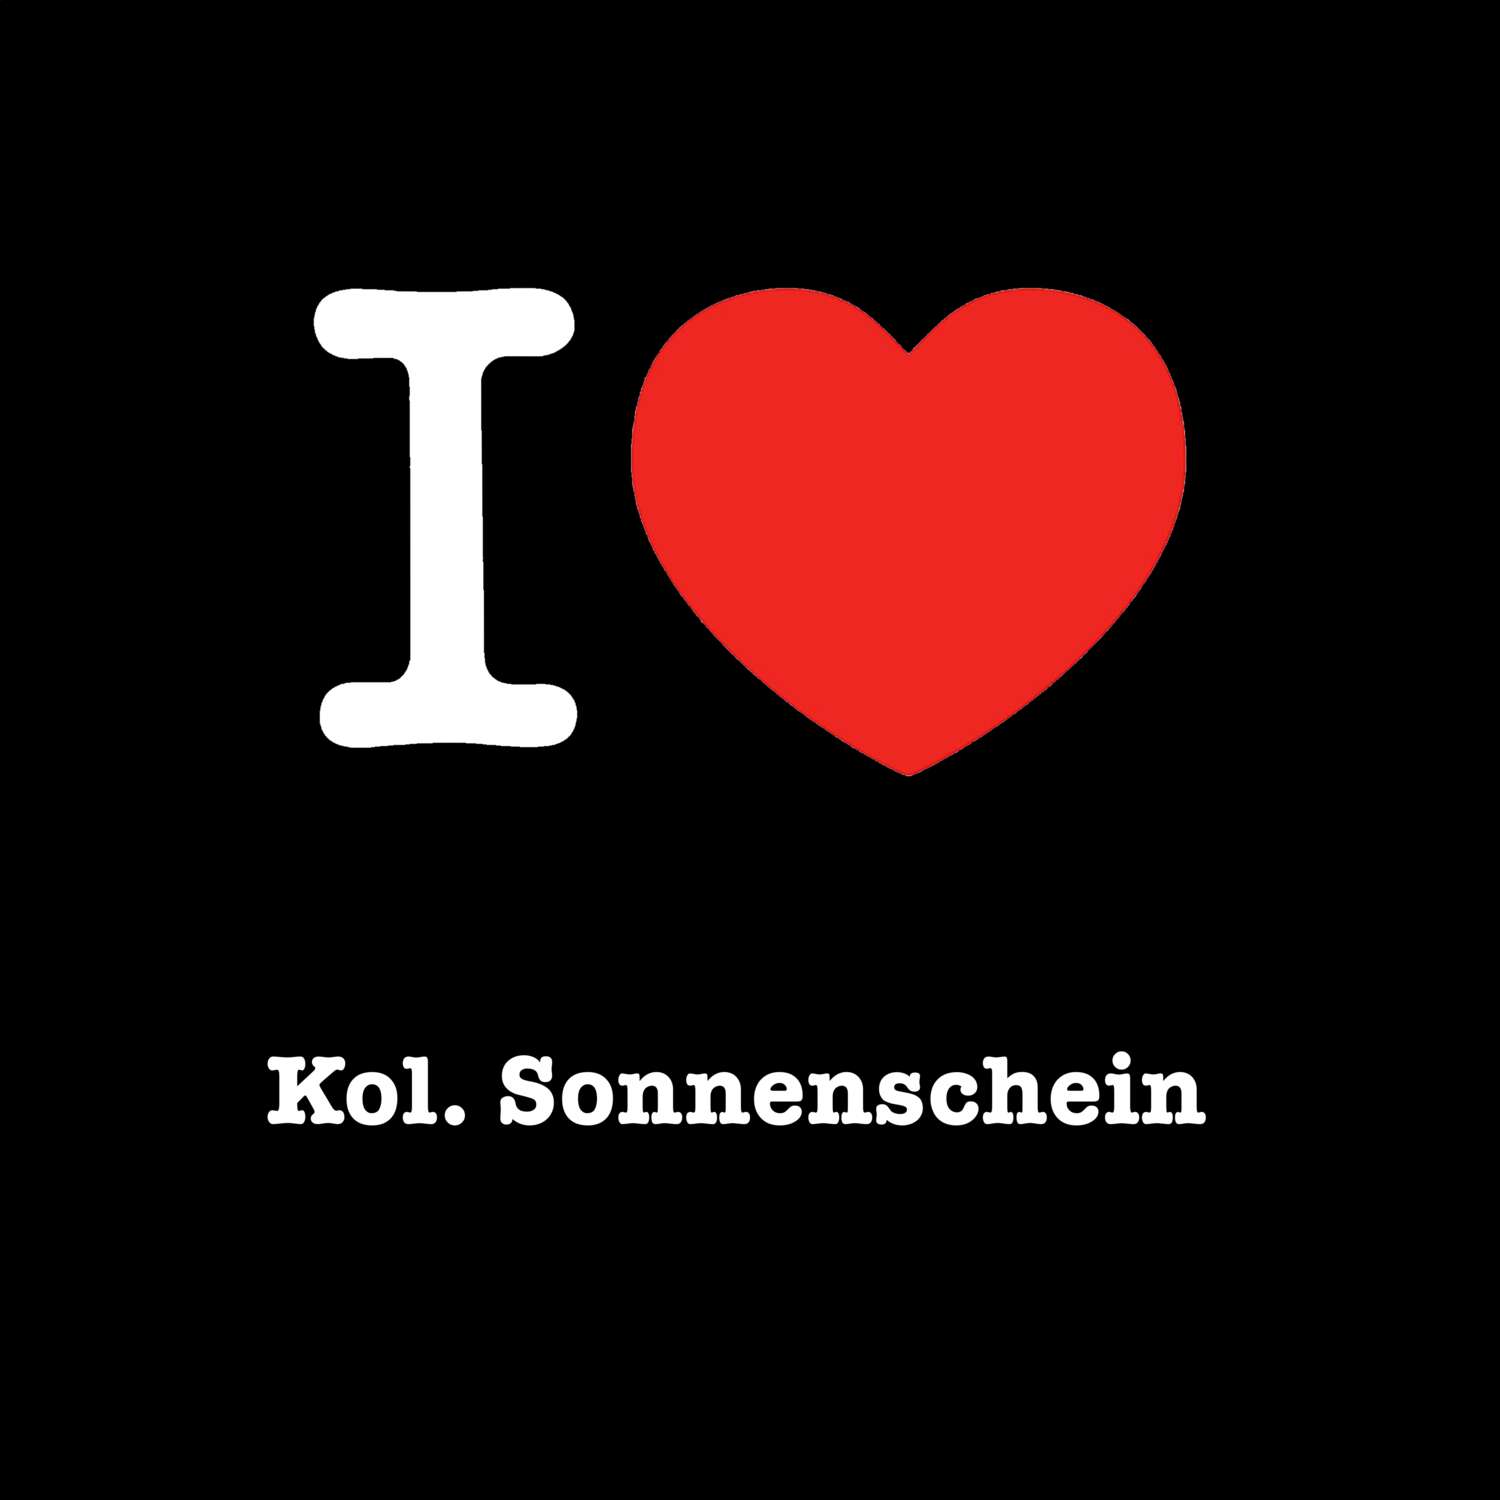 Kol. Sonnenschein T-Shirt »I love«